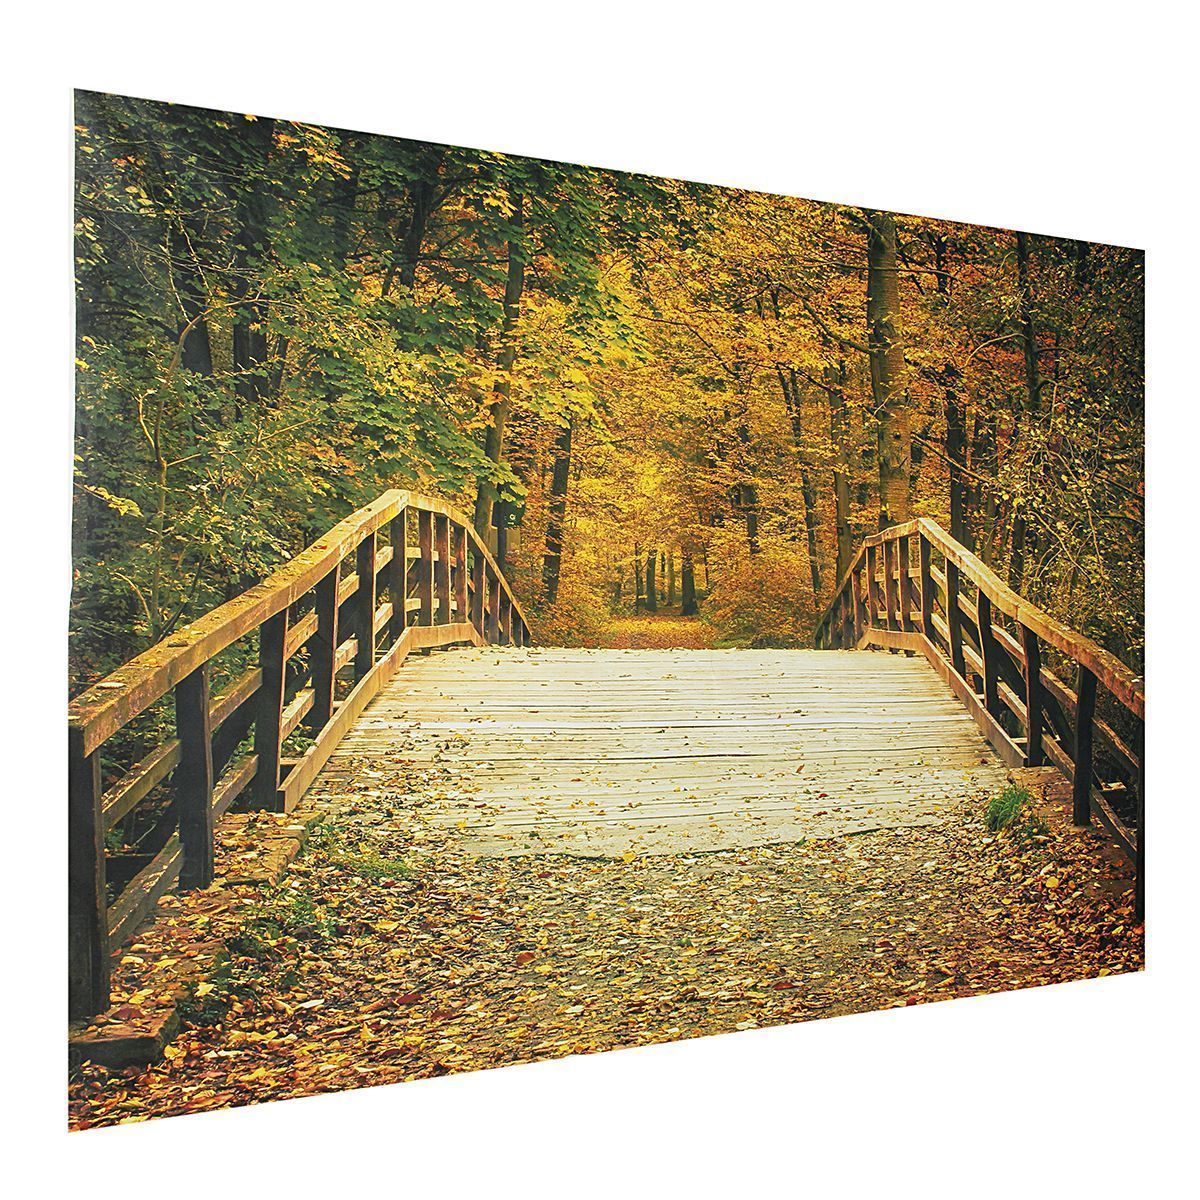 5x7FT-Autumn-Fall-Bridge-Photography-Vinyl-Background-Studio-Photo-Backdrops-1142368